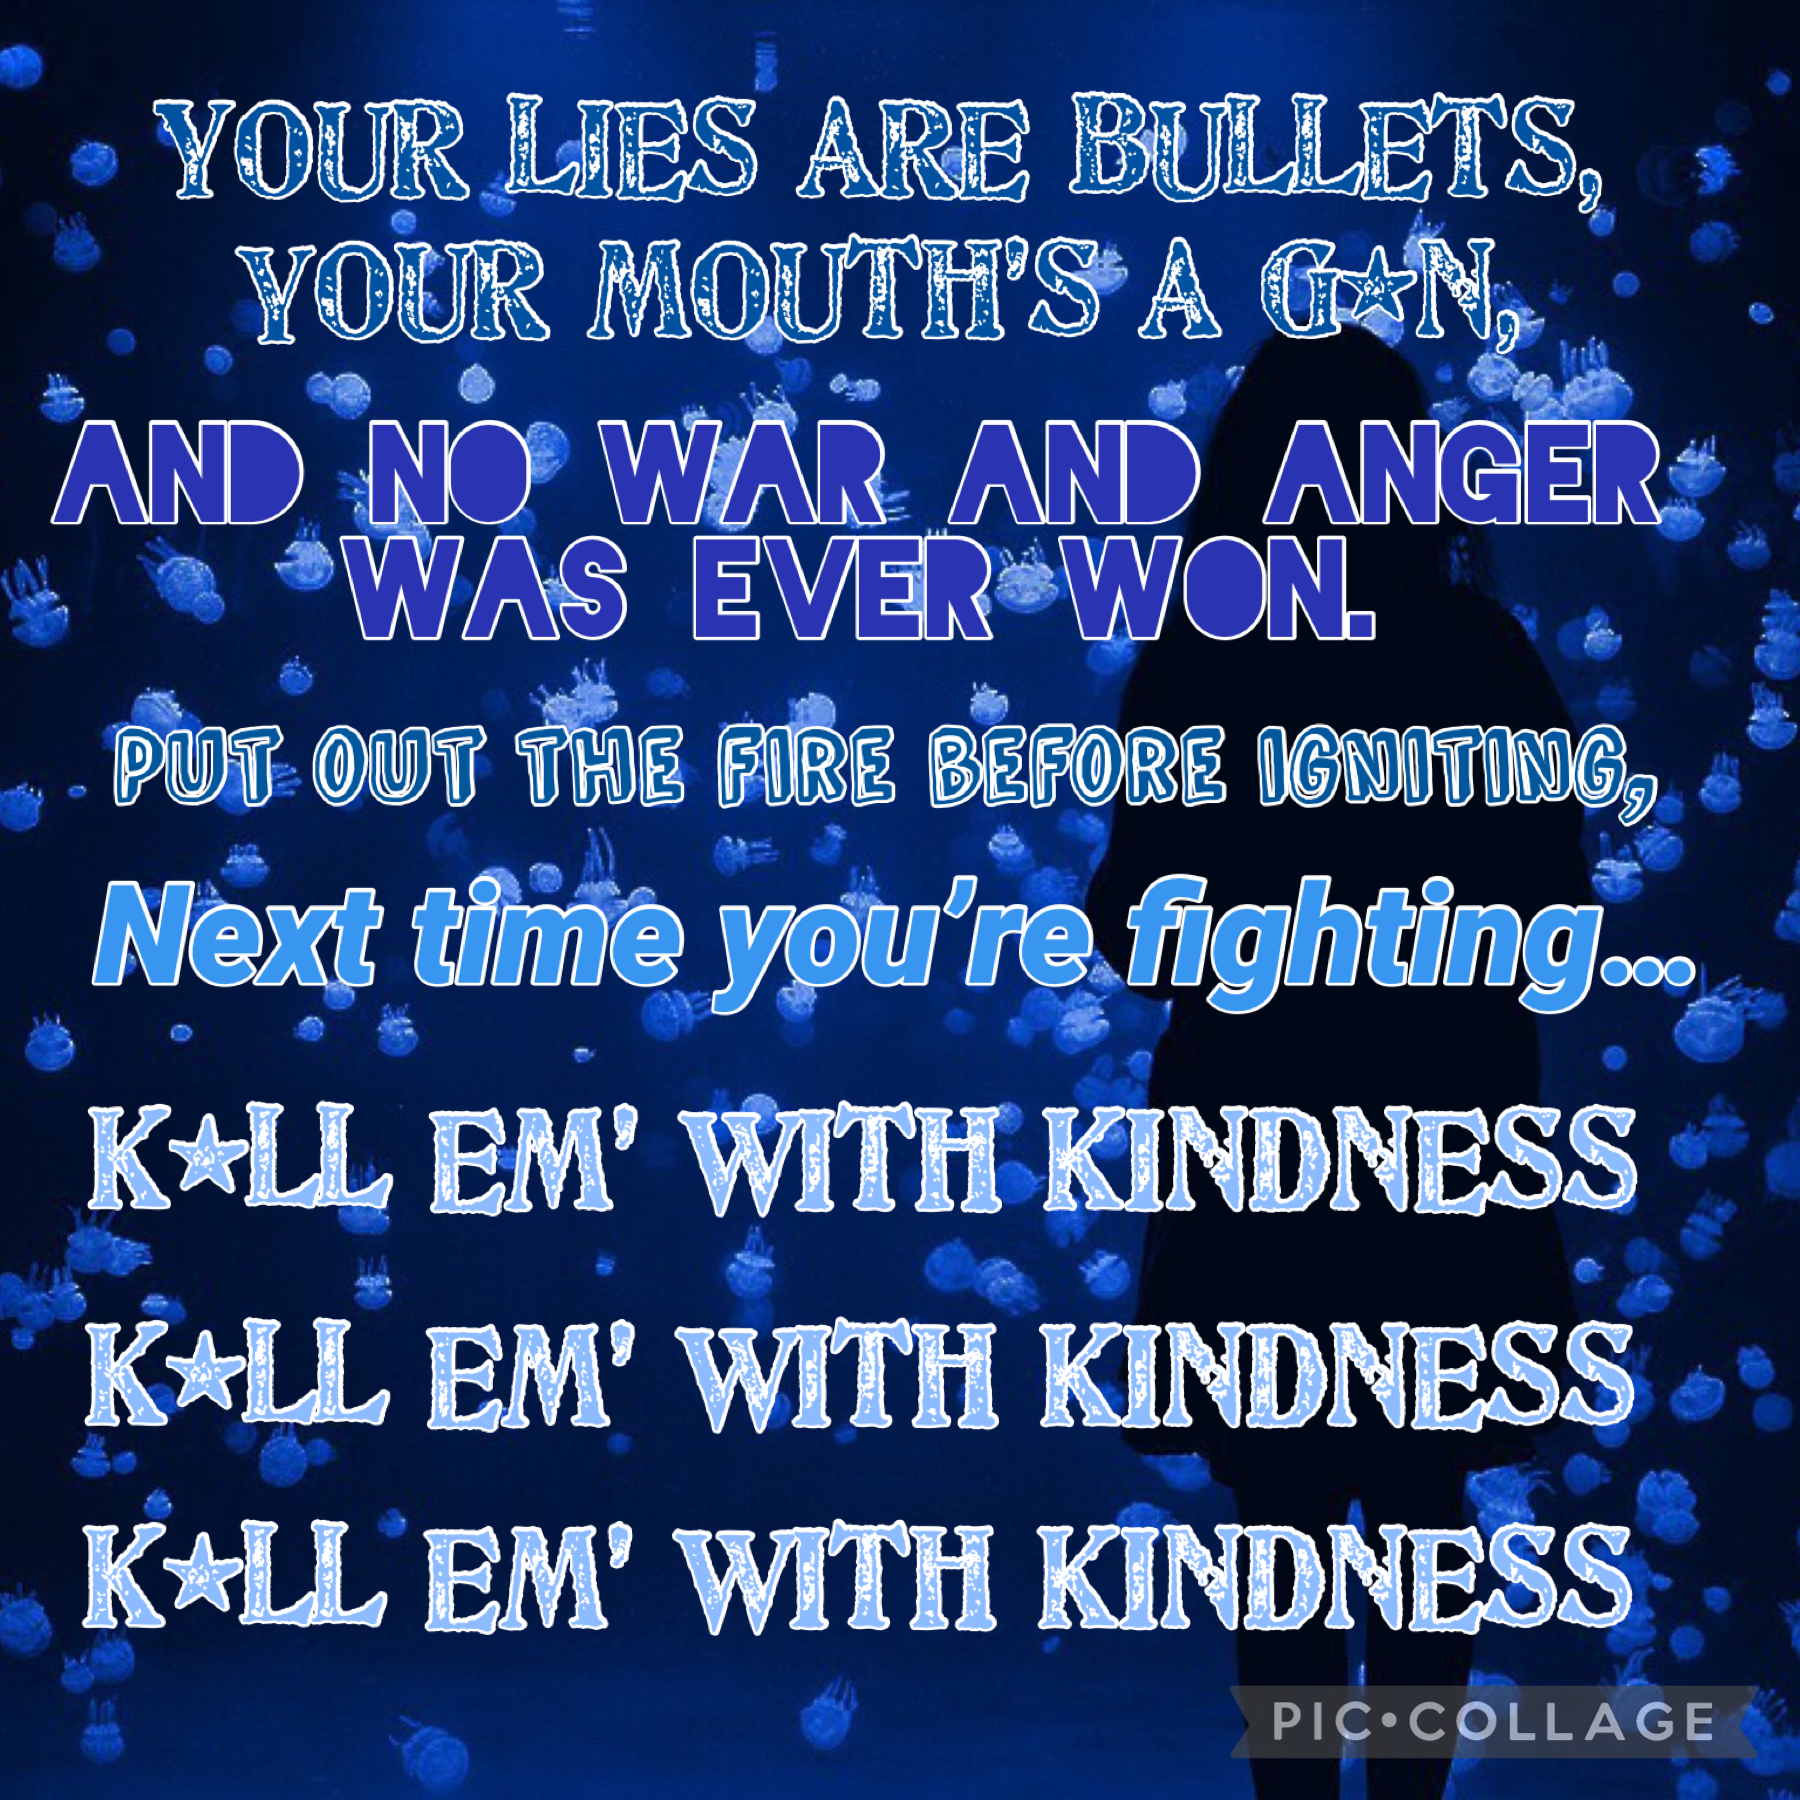 8/22/22 (tap)
Lyrics from
K*ll em’ with kindness